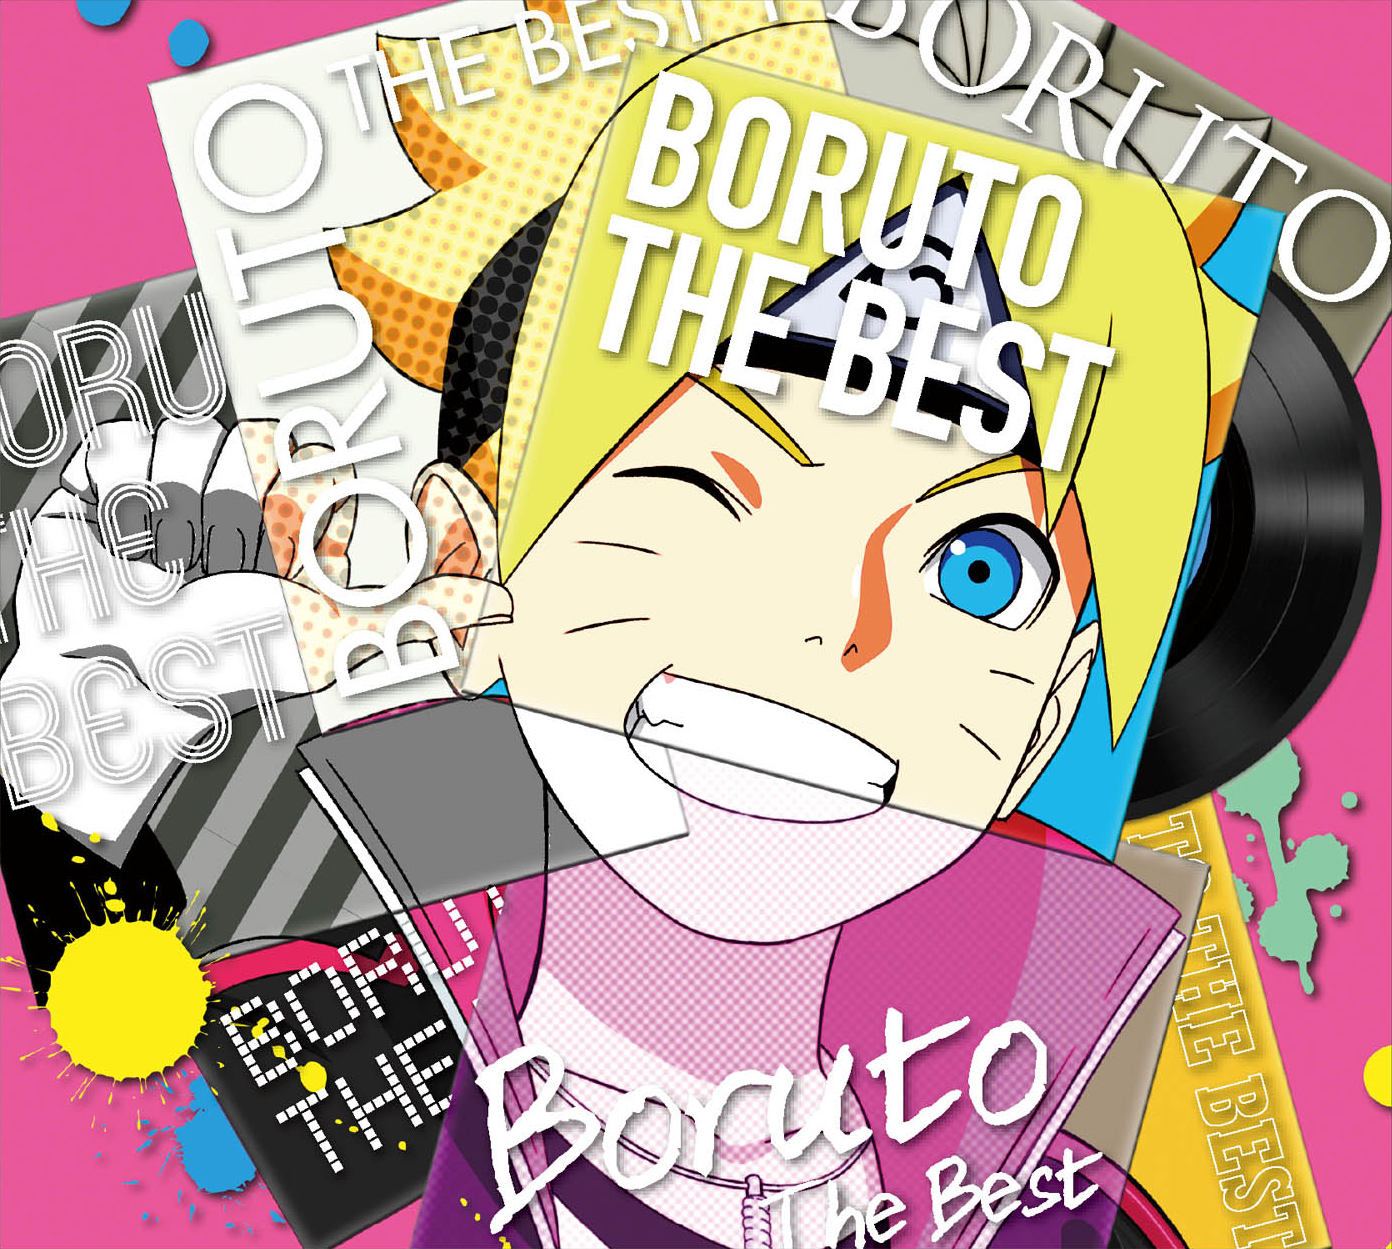 Tvアニメ Boruto ボルト Naruto Next Generations 主題歌コンピレーションアルバム Boruto The Best が19年12月18日 水 発売決定 株式会社アニプレックスのプレスリリース